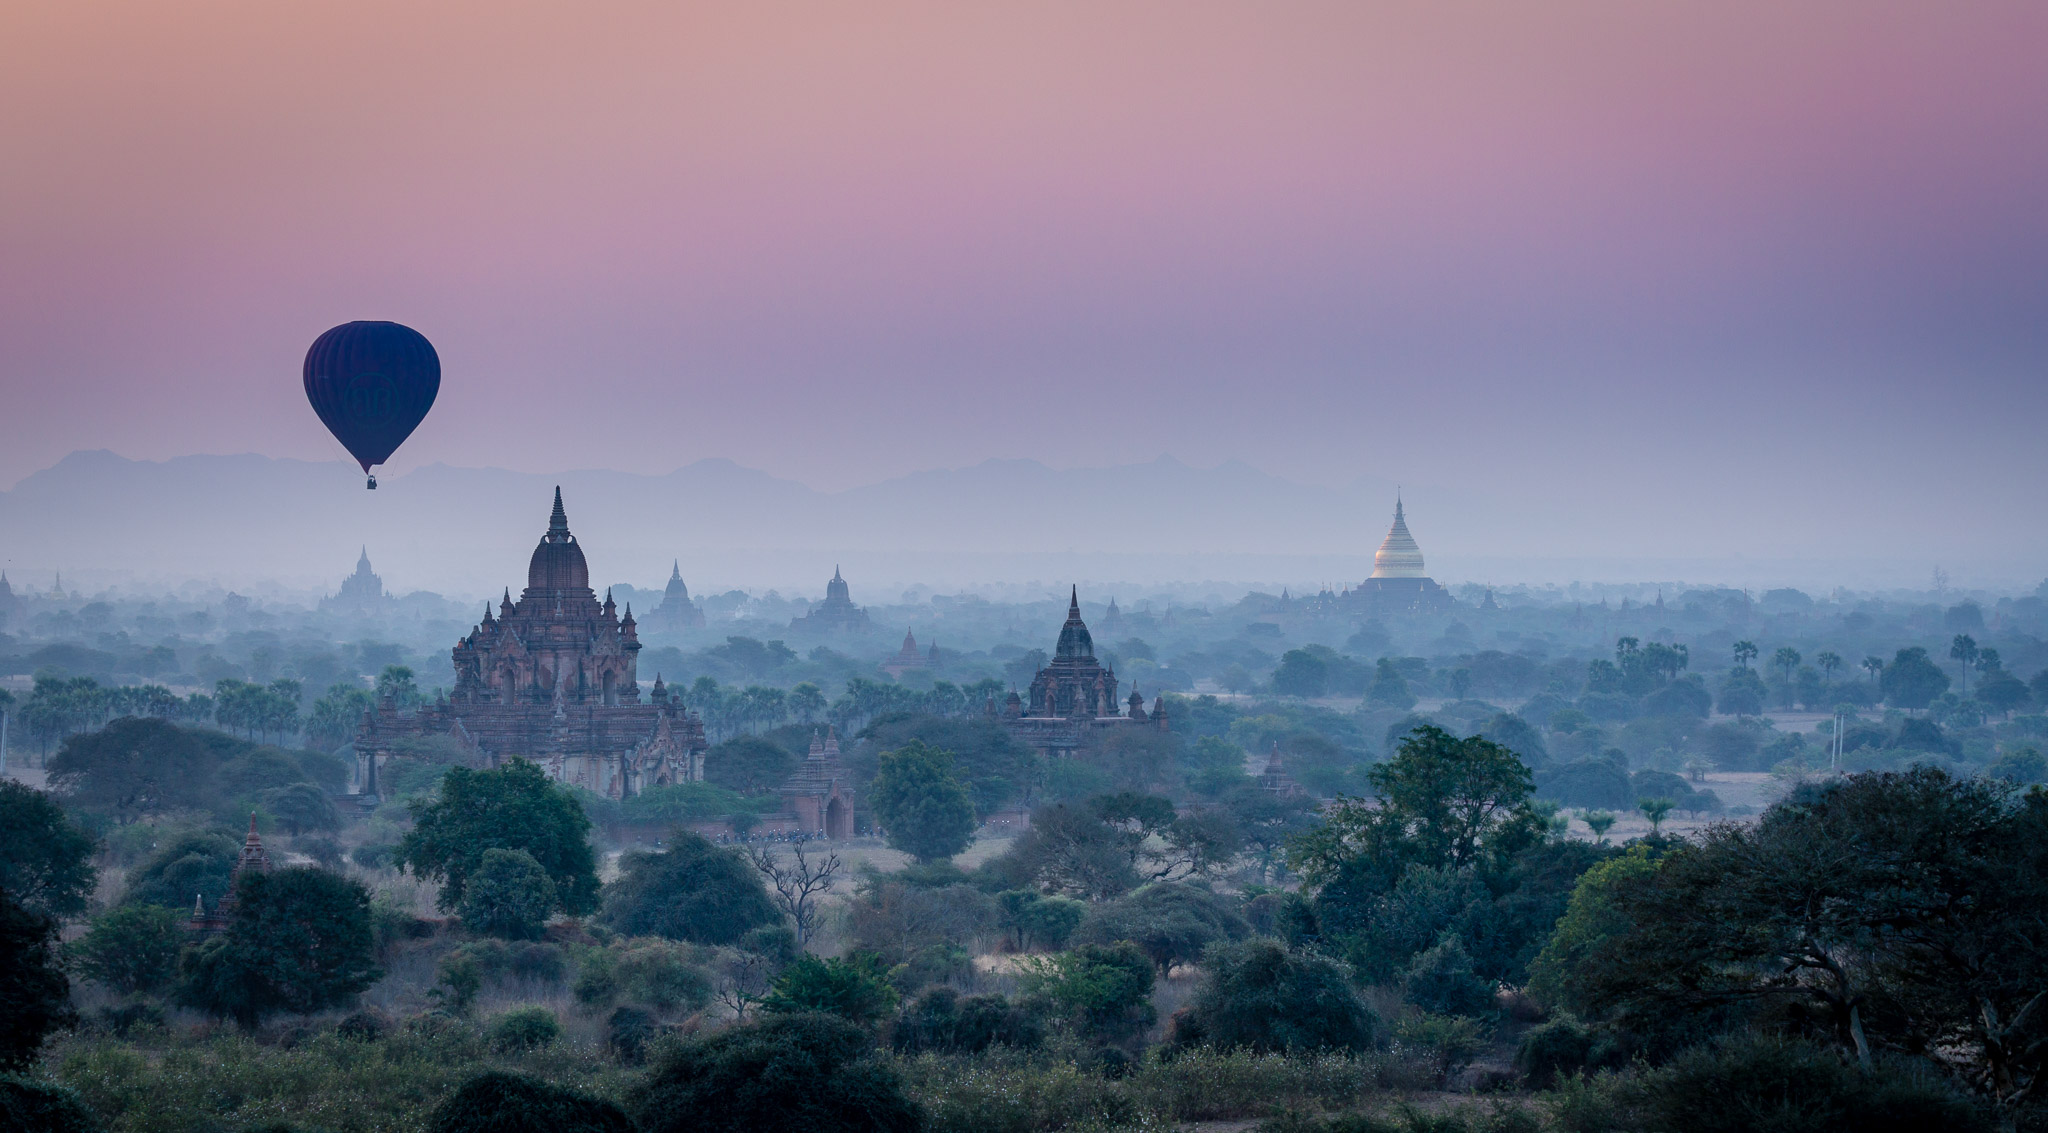 Sunrise hot air balloons over Bagan